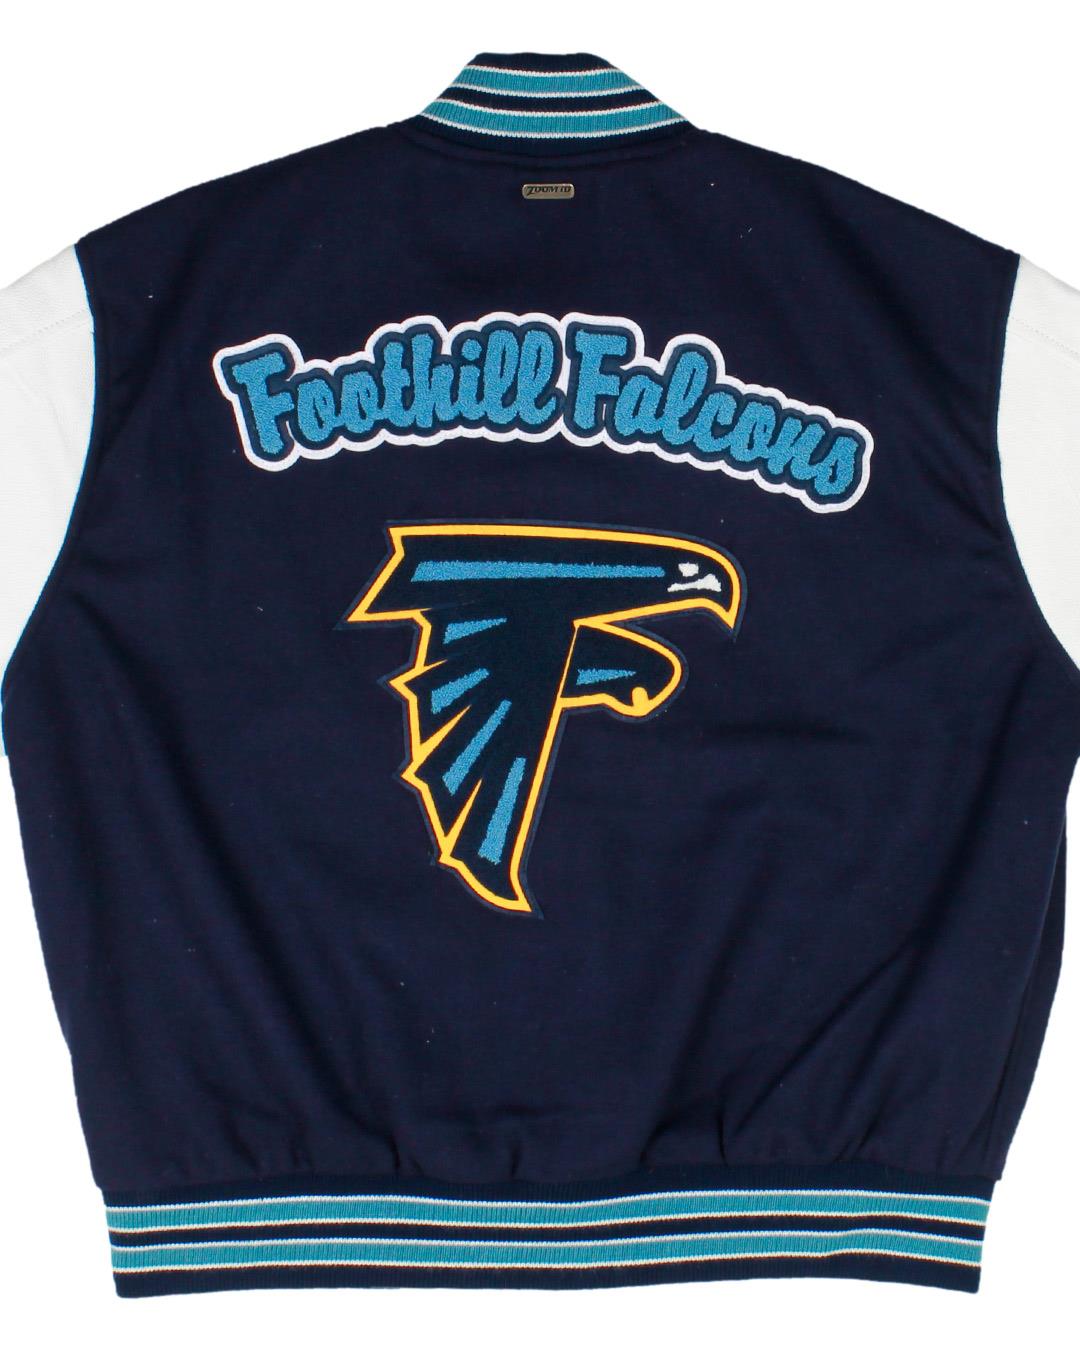 Foothill High School Lettermen Jacket, Henderson NV - Back